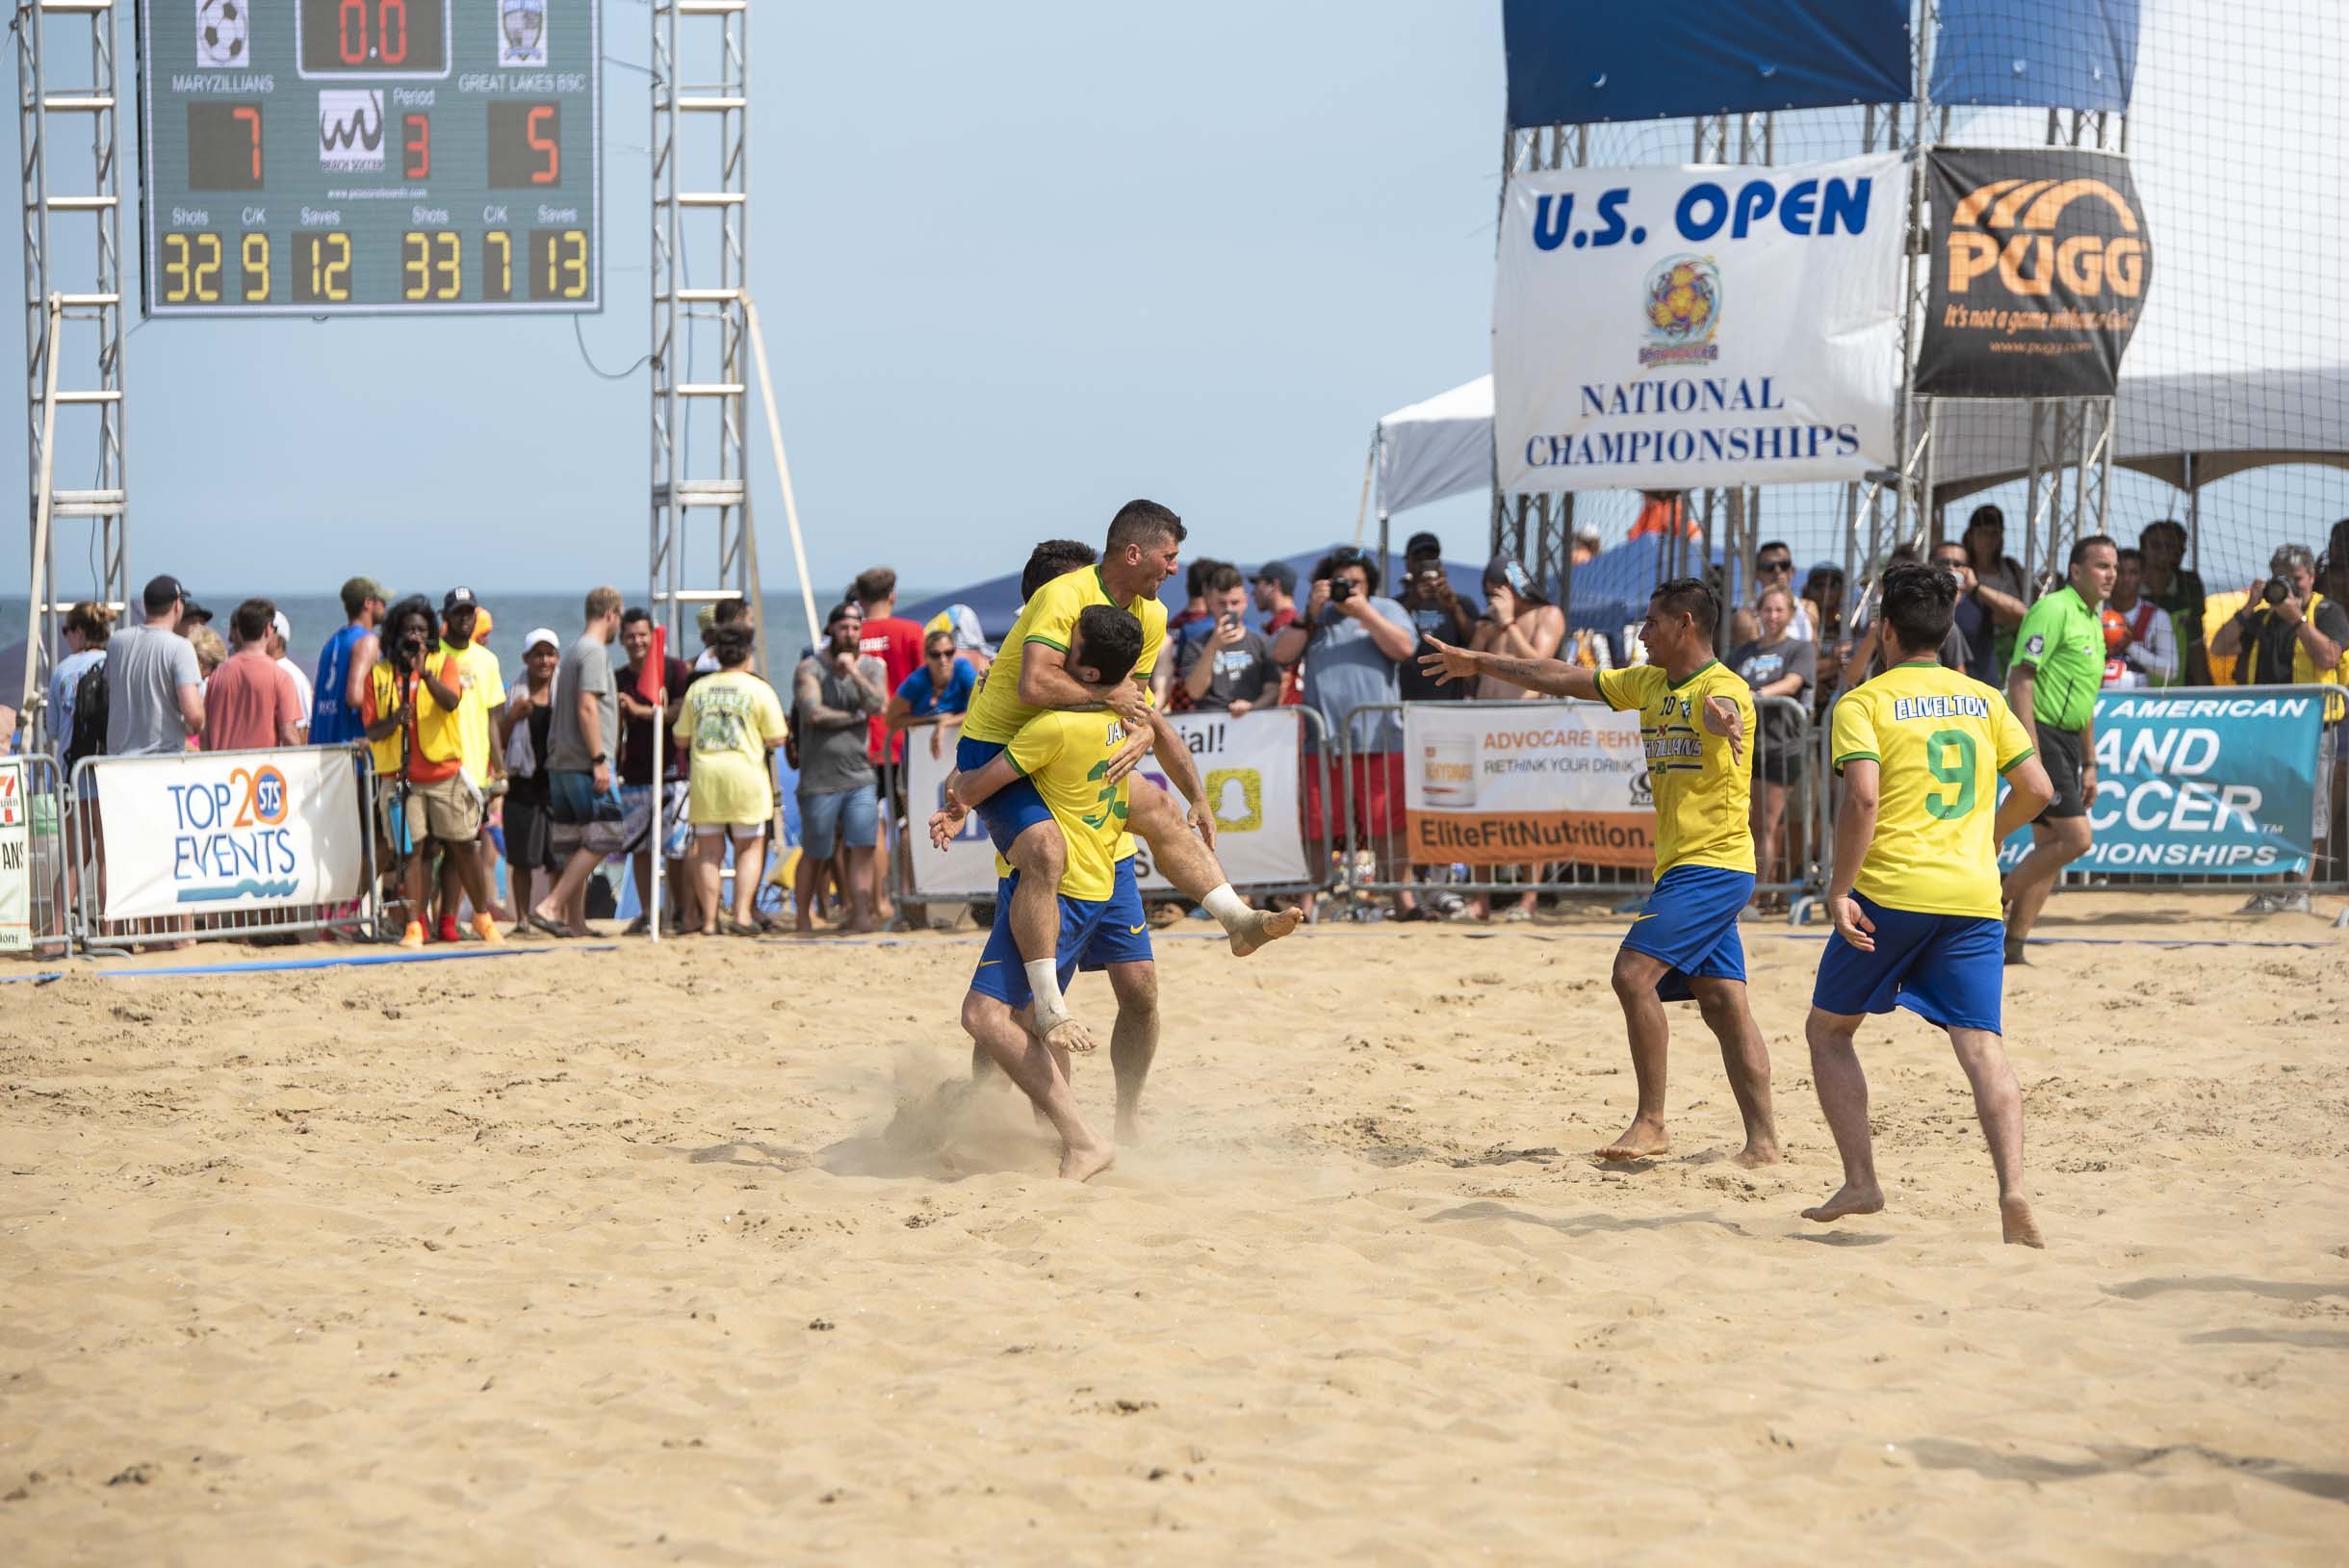 Maryzillians beach sand soccer club celebrate their 7 to 5 win over Great Lakes Beach Soccer club.